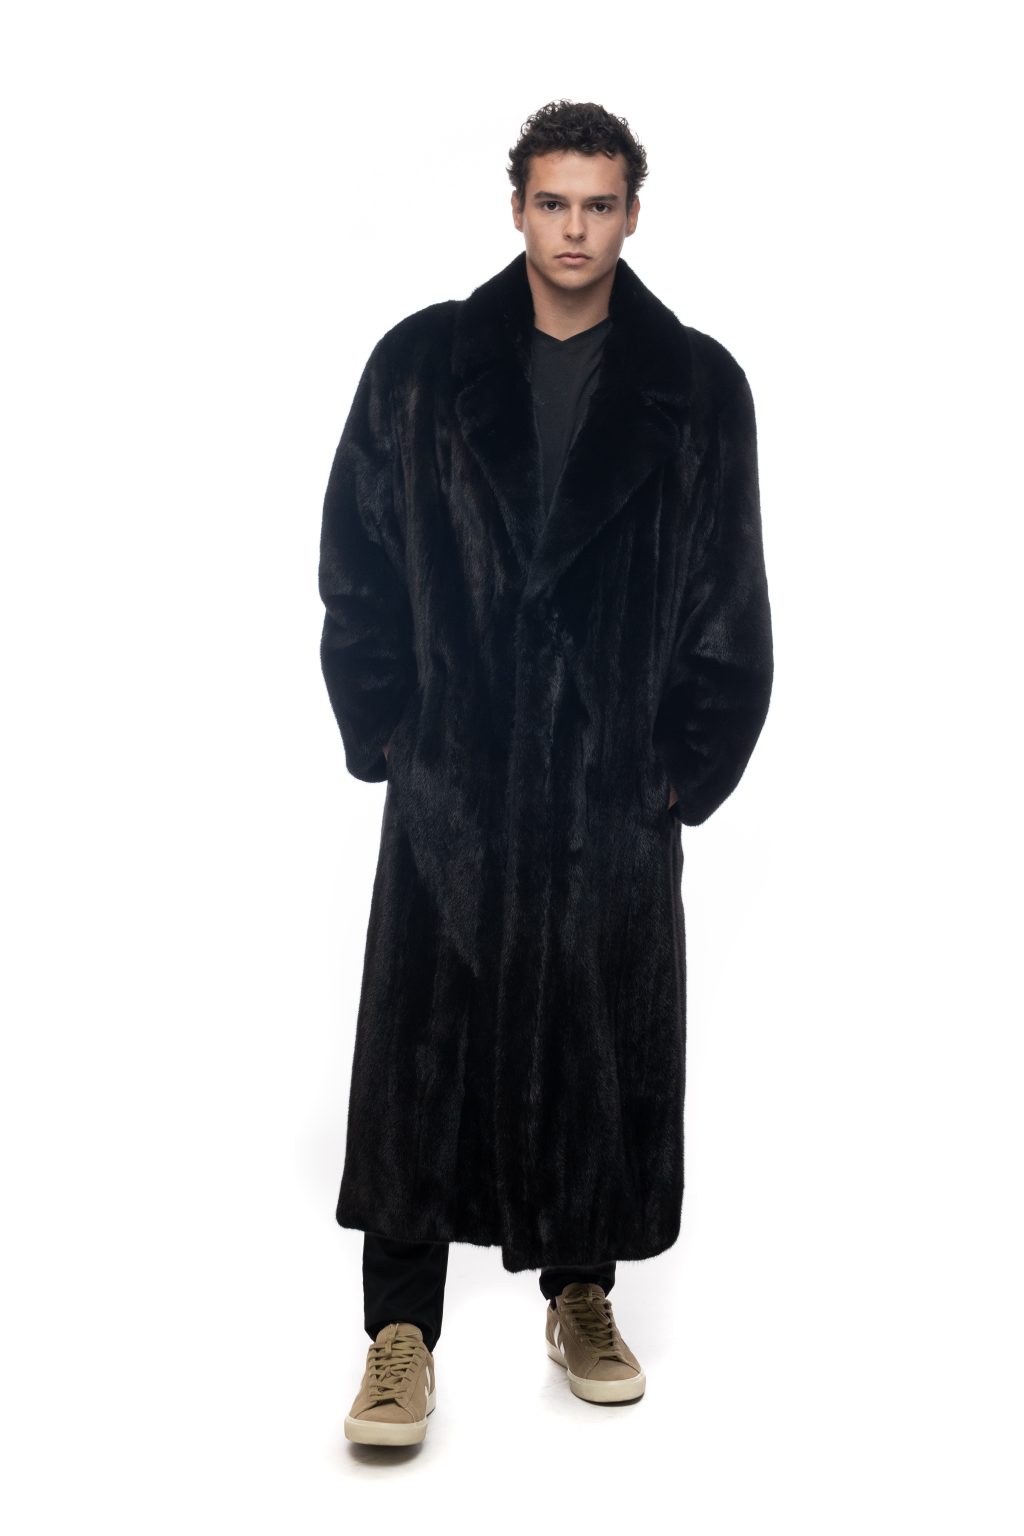 Sakowitz Furs | Long Fur Coat, Chinchilla Fur Coat , Real Fur Coat for ...